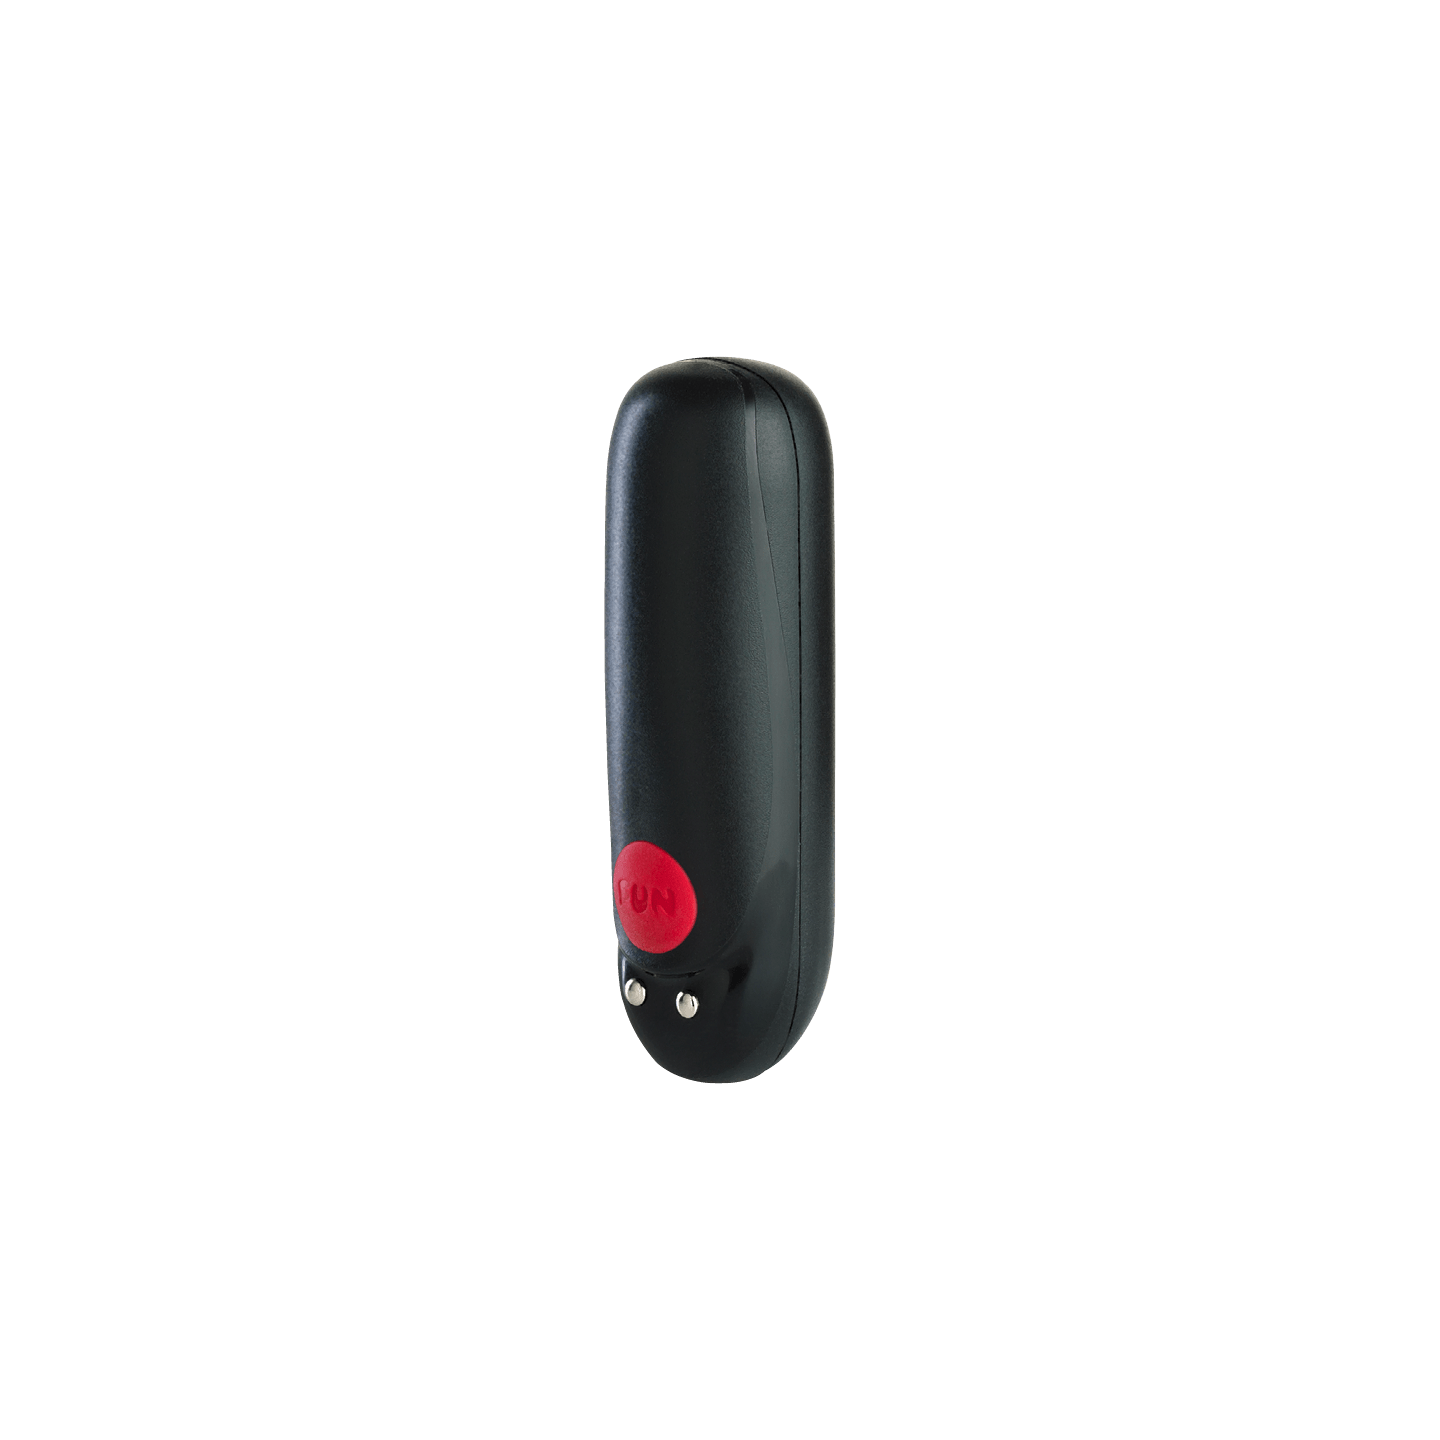 FUN FACTORY - Massage BULLET Bullet Vibrator